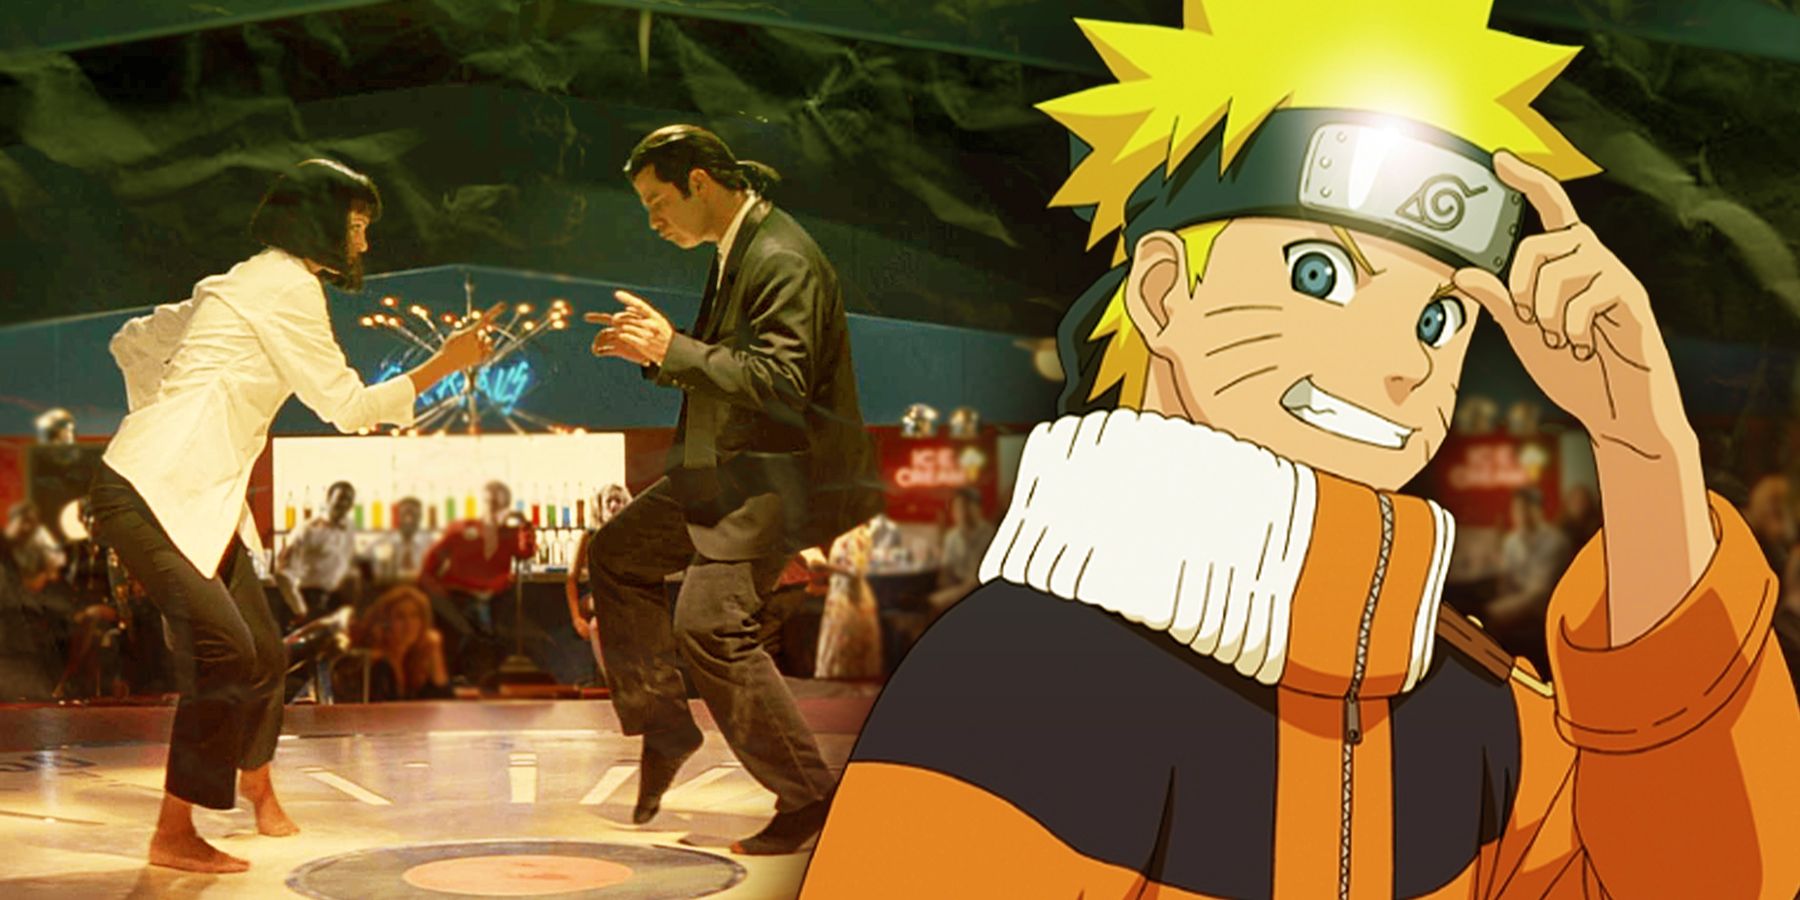 Naruto creator Masashi Kishimoto took inspiration from Pulp Fiction